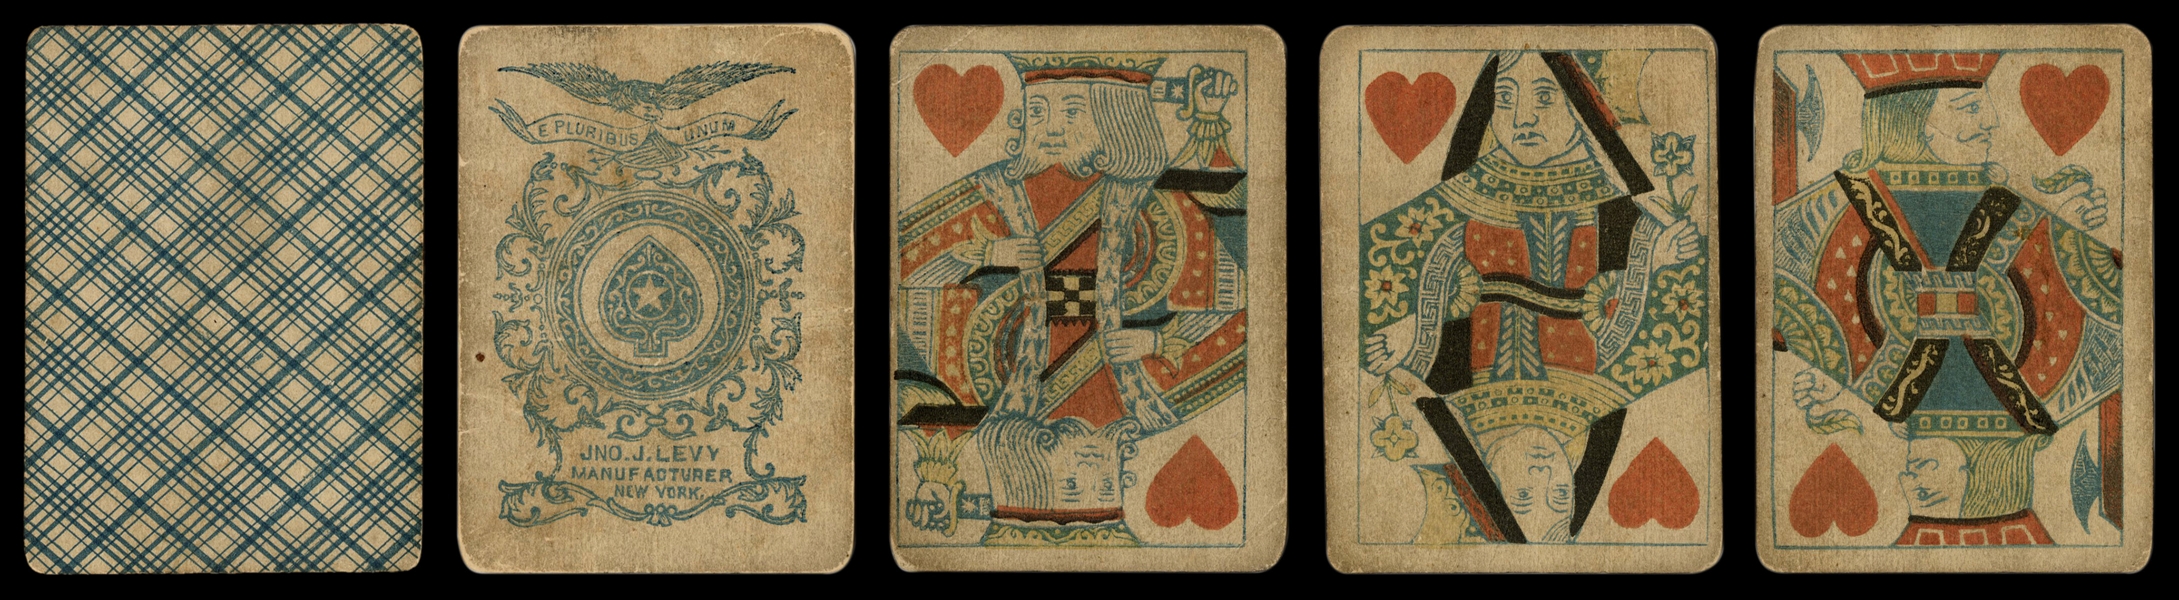  Jno. [John] J. Levy Playing Cards. New York, ca. 1865. 51 o...